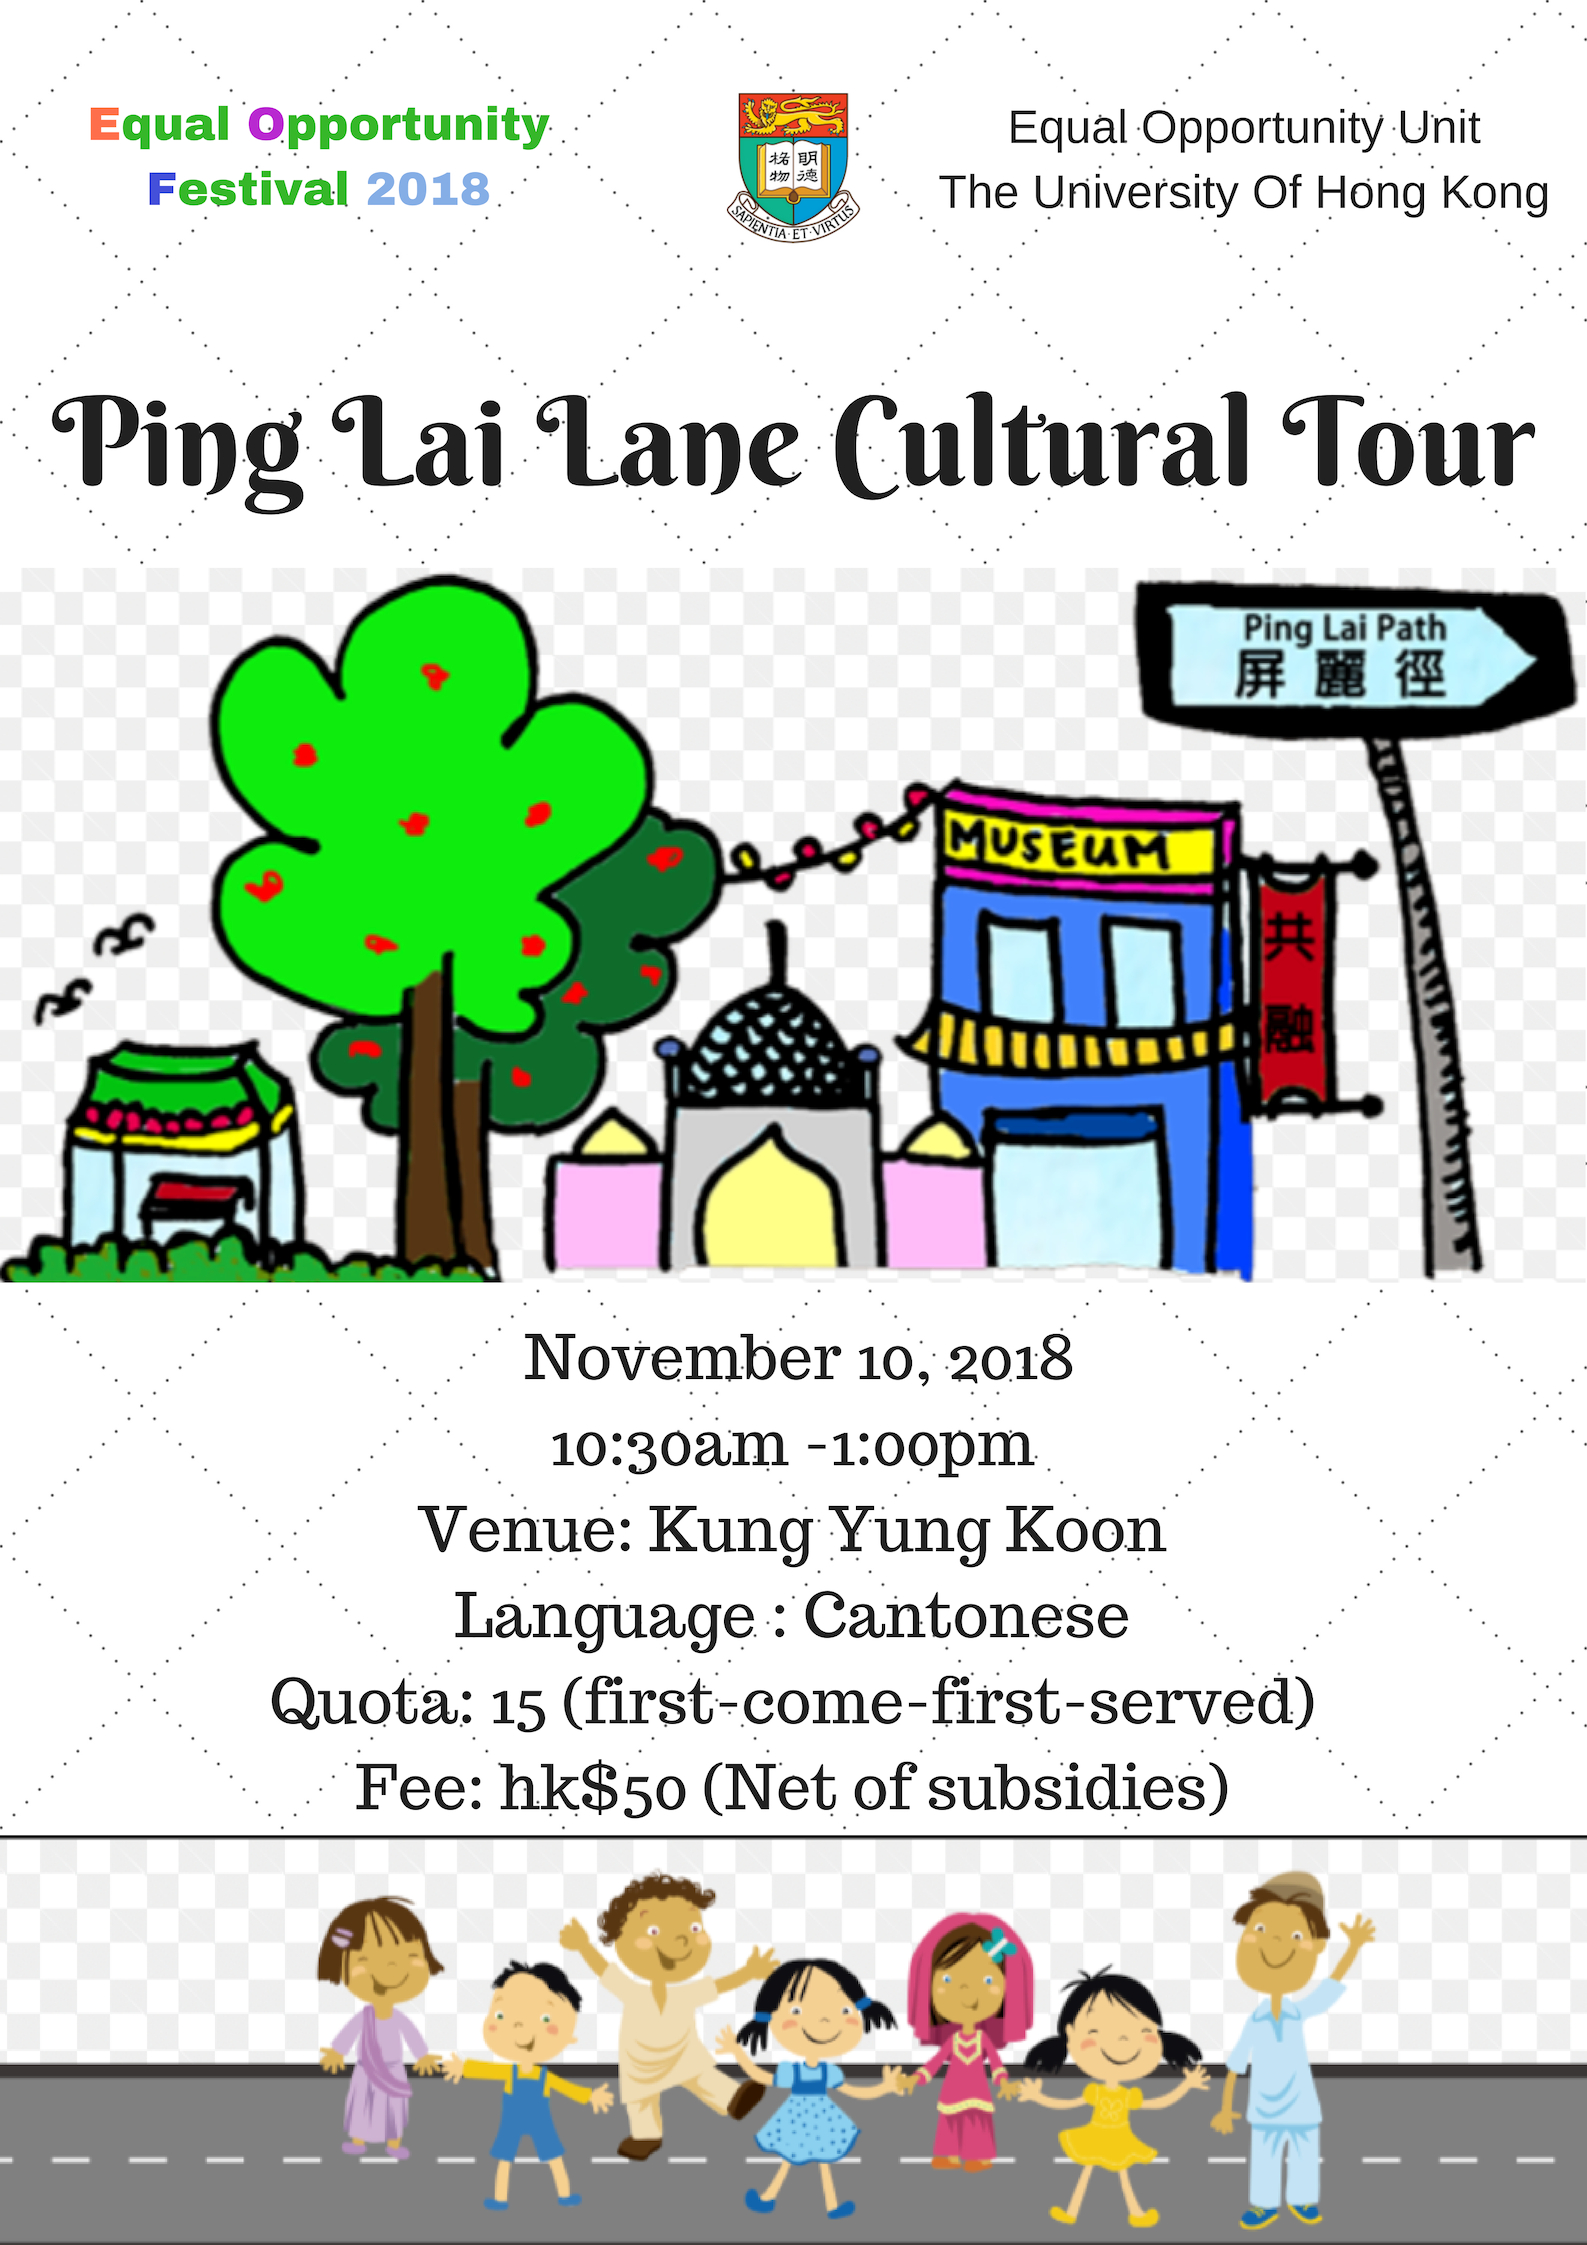 Ping Lai Lane Cultural Tour